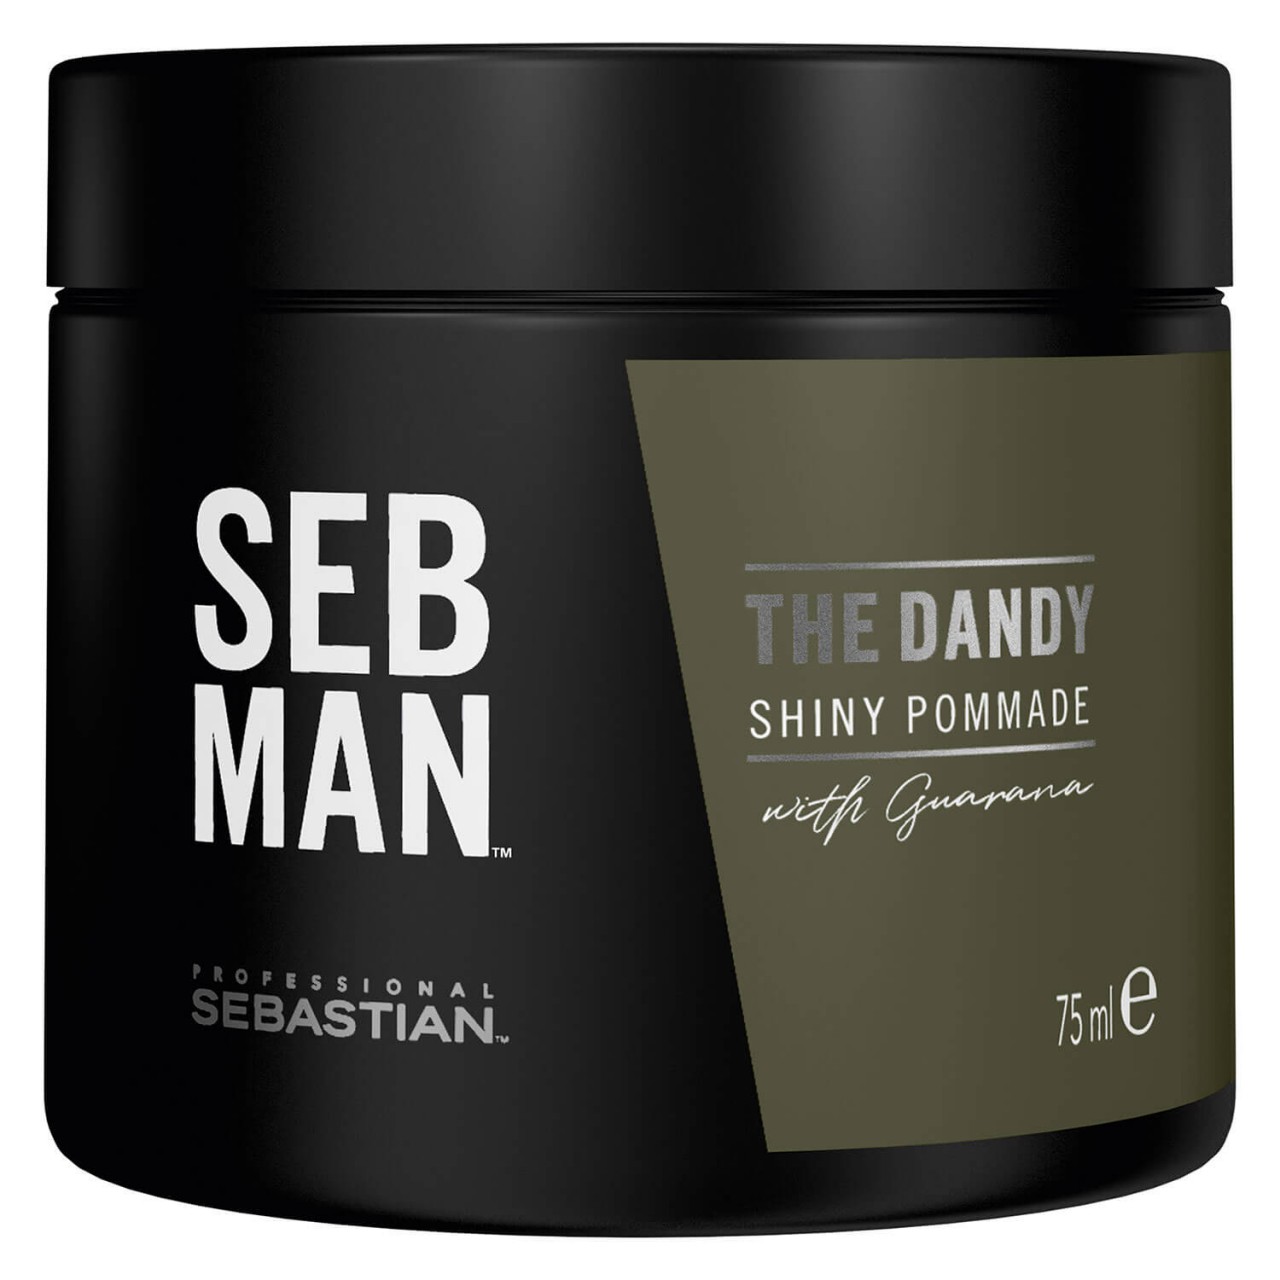 SEB MAN - The Dandy Shiny Pomade von Sebastian